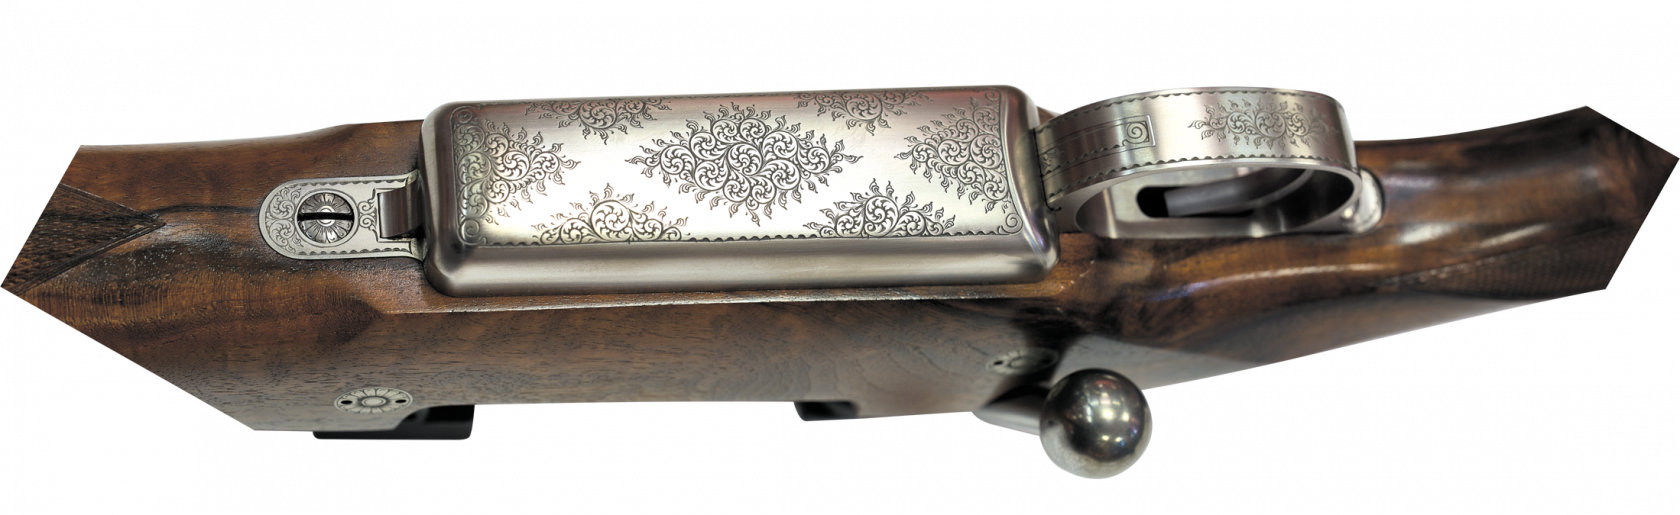 Mauser+M98+Magnum+416Rigby+2345440+6 0206.png